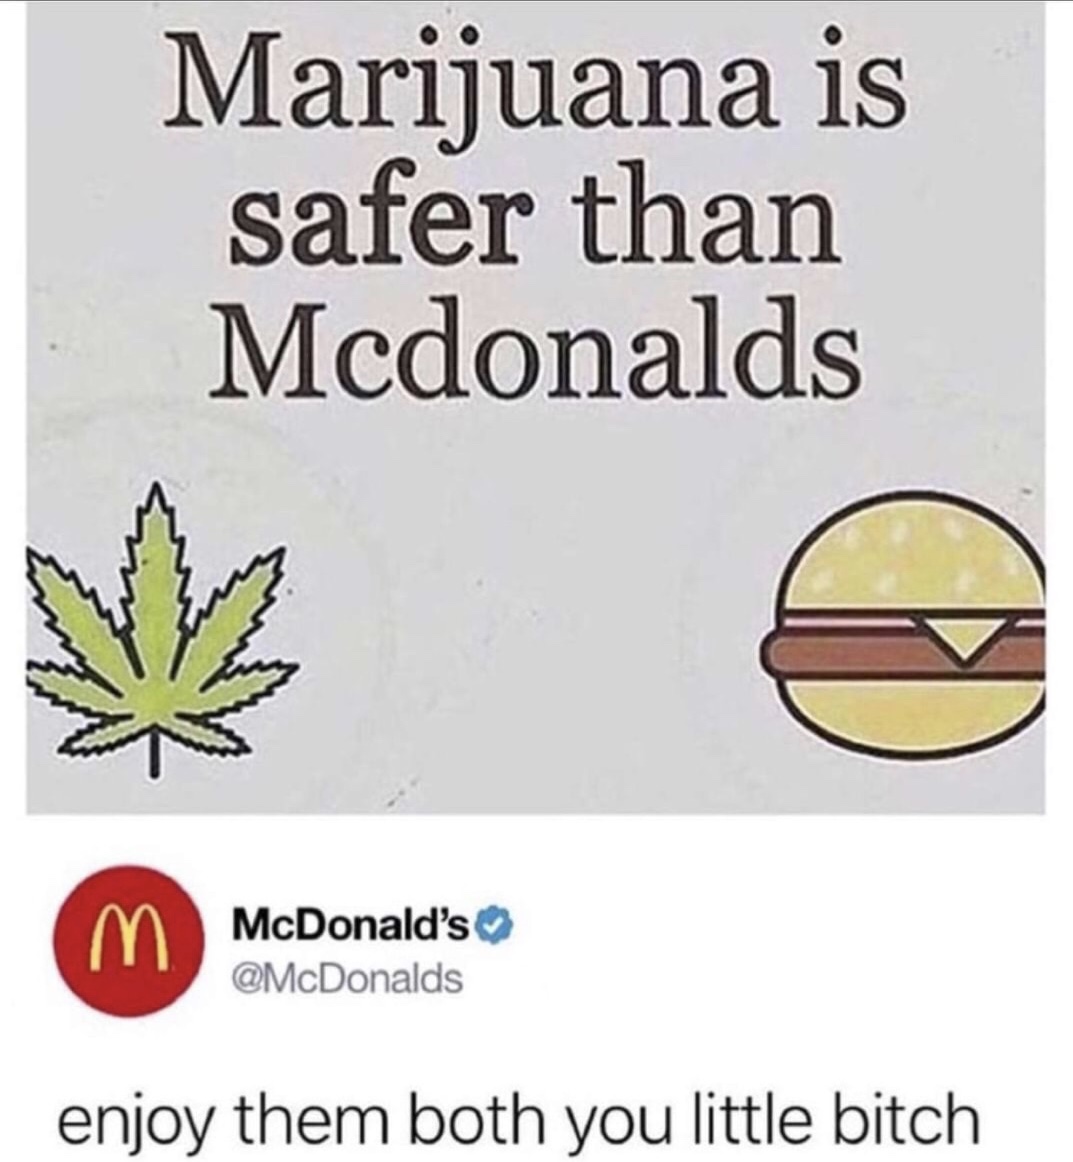 los angeles department of aging - Marijuana is safer than Mcdonalds McDonald's MaDonalelse enjoy them both you little bitch